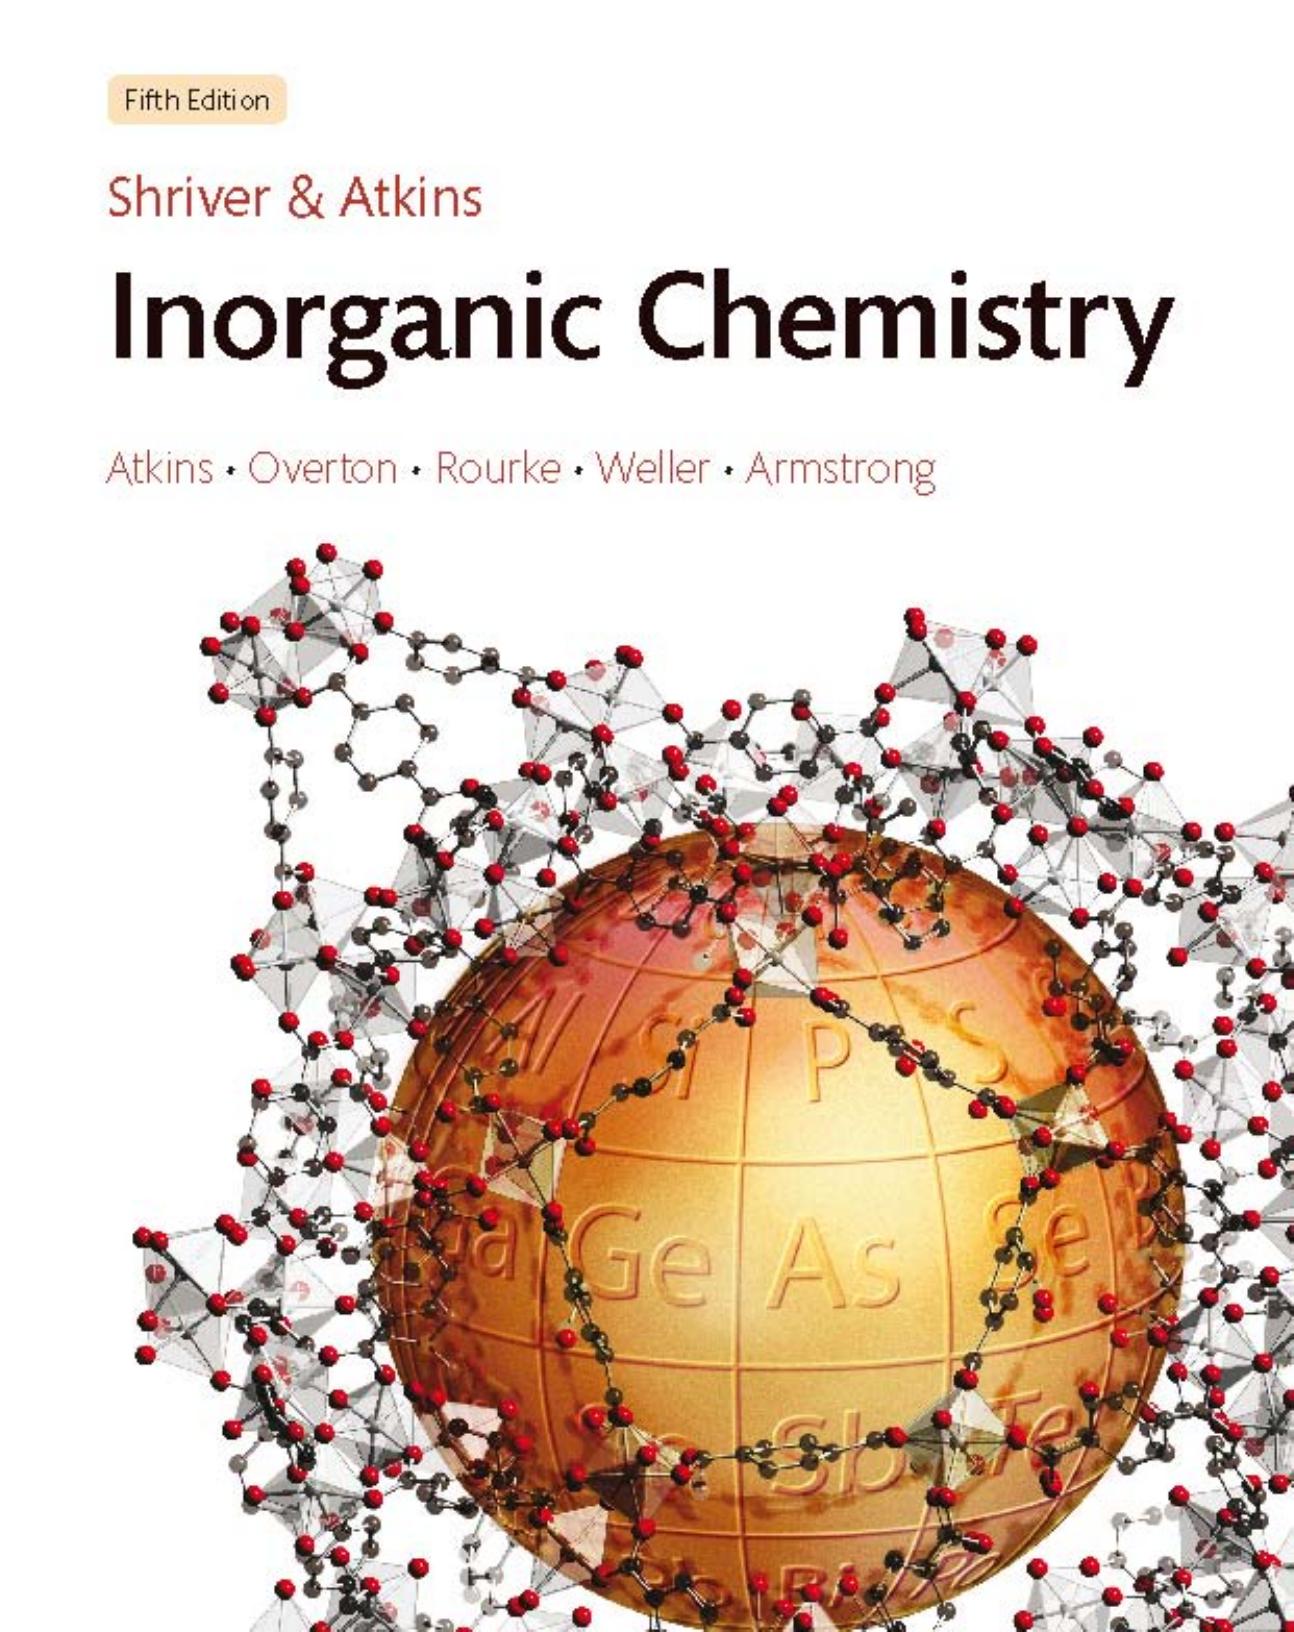 inorganic chemistry catherine e housecroft solutions manual pdf.341